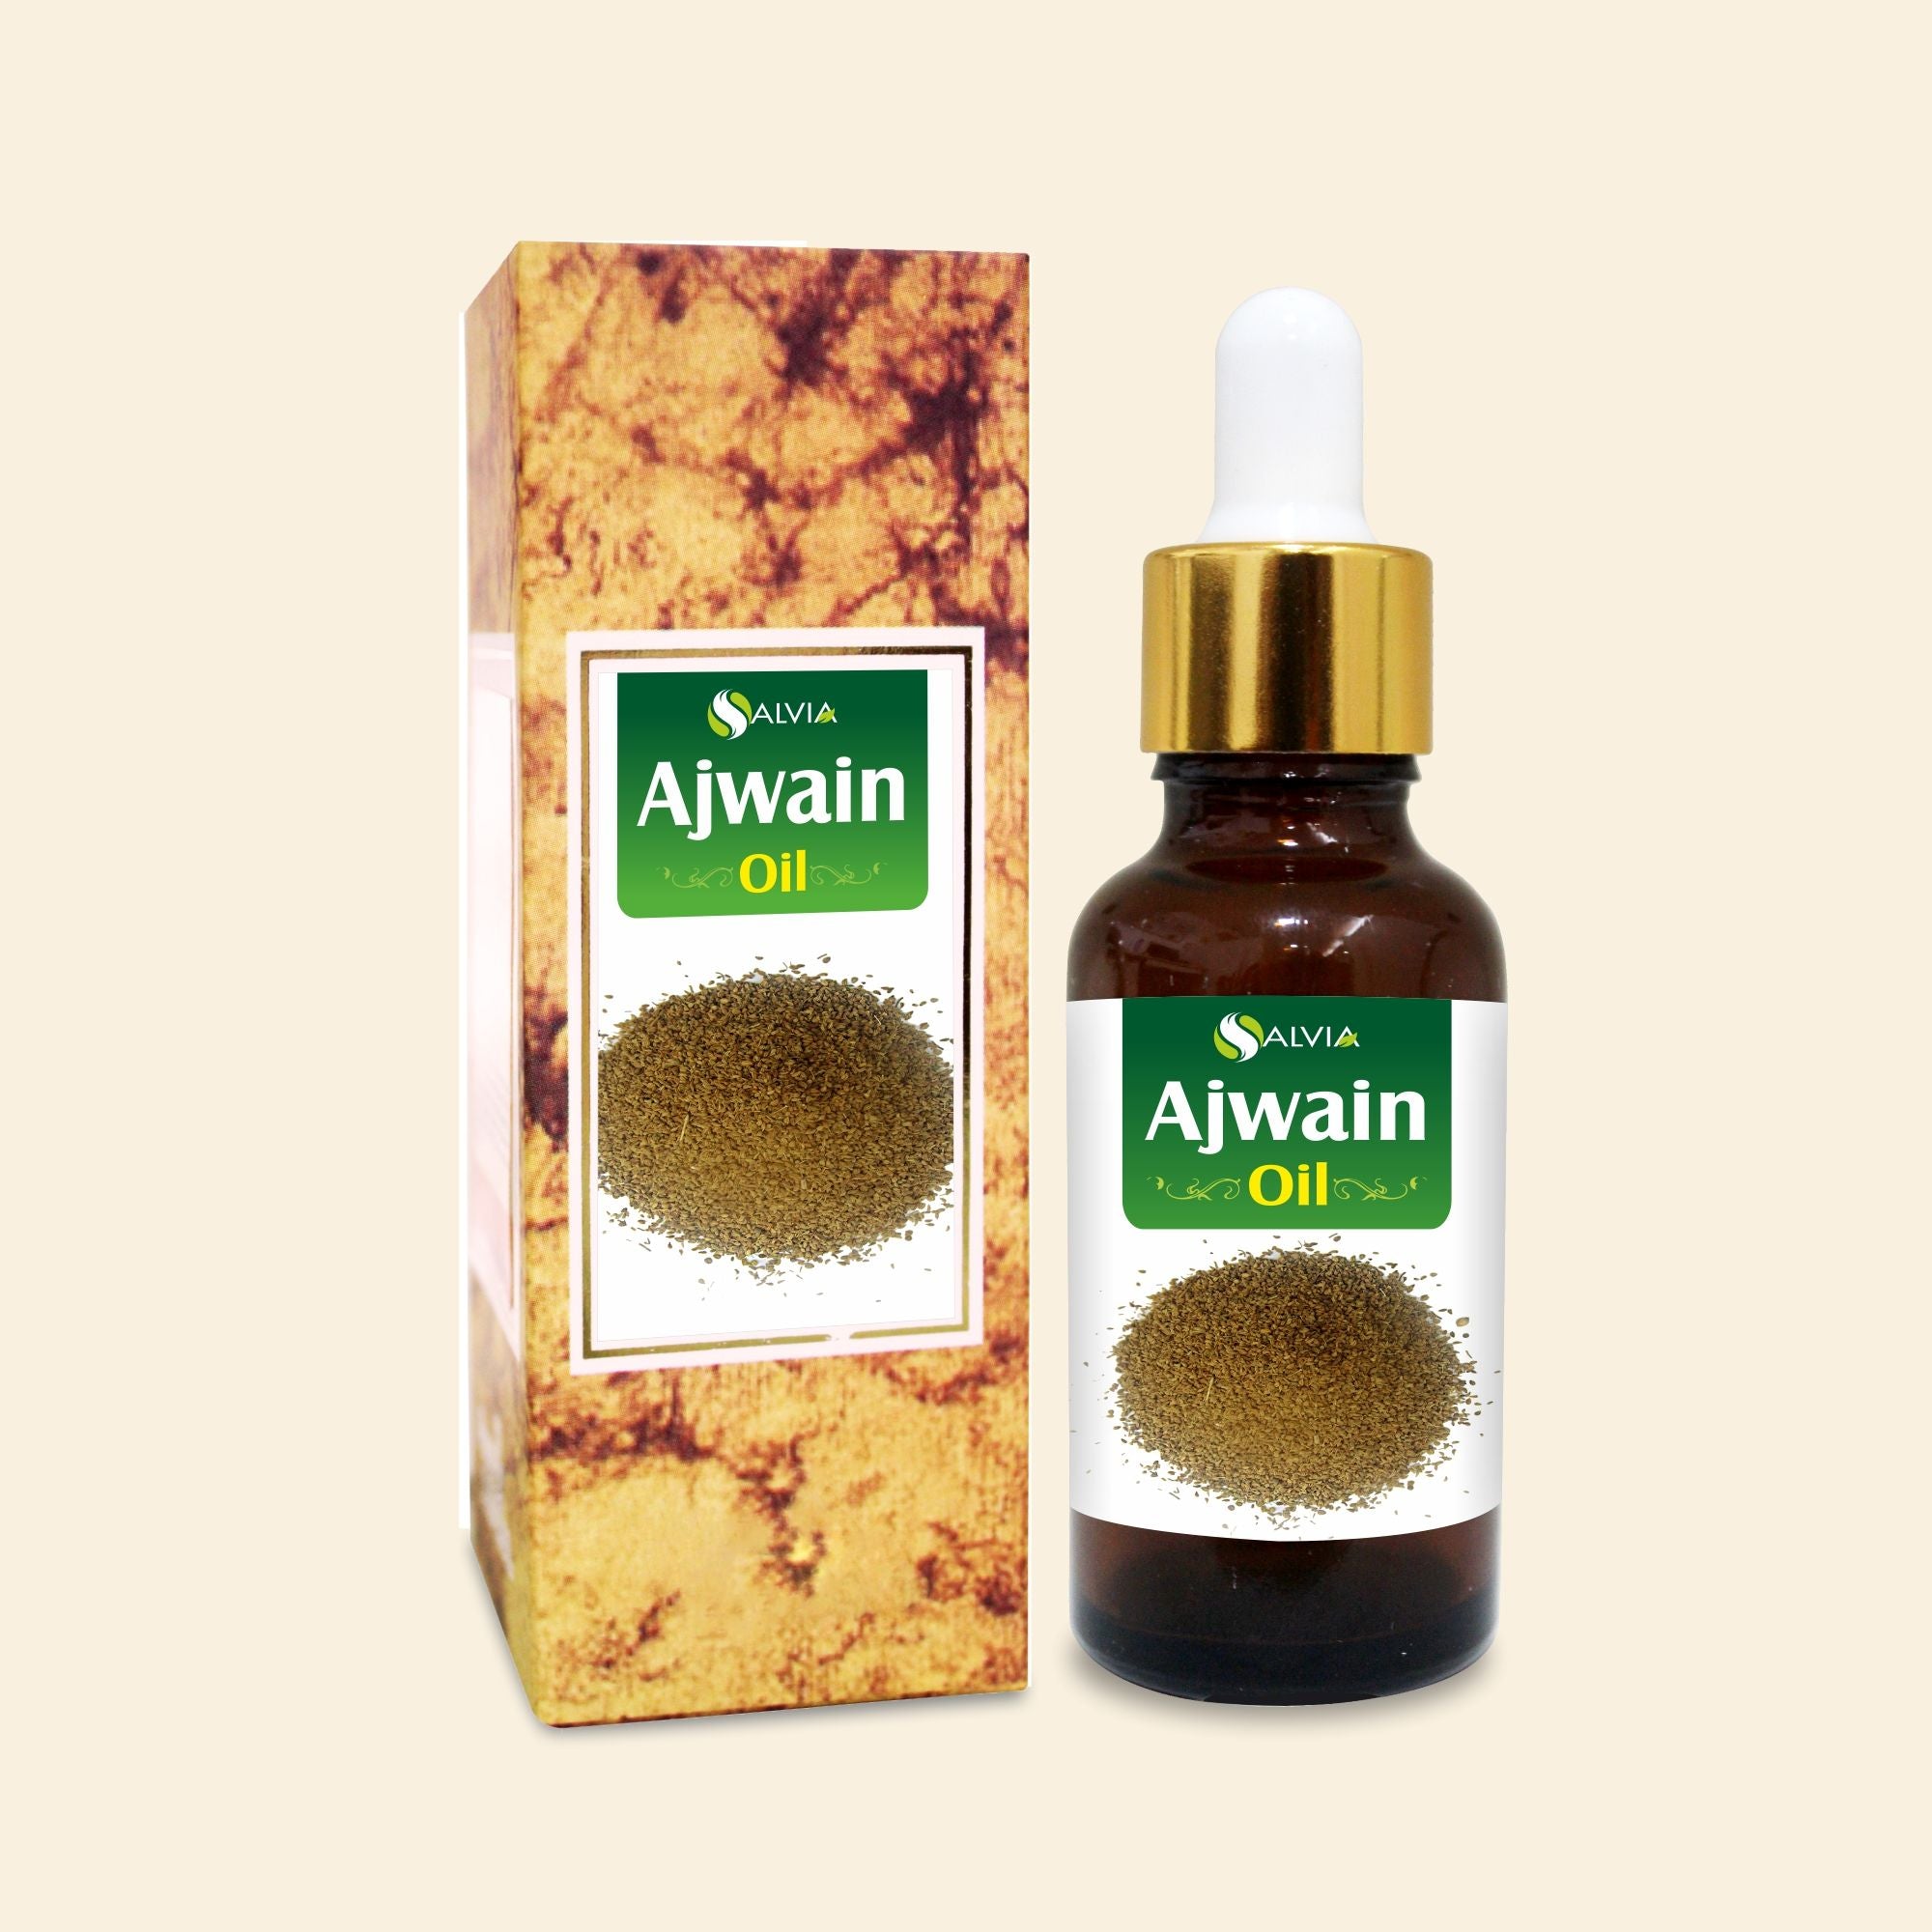 Salvia Natural Essential Oils Ajwain Oil (Trachyspermumammi) 100% Natural Essential Oil Therapeutic Grade